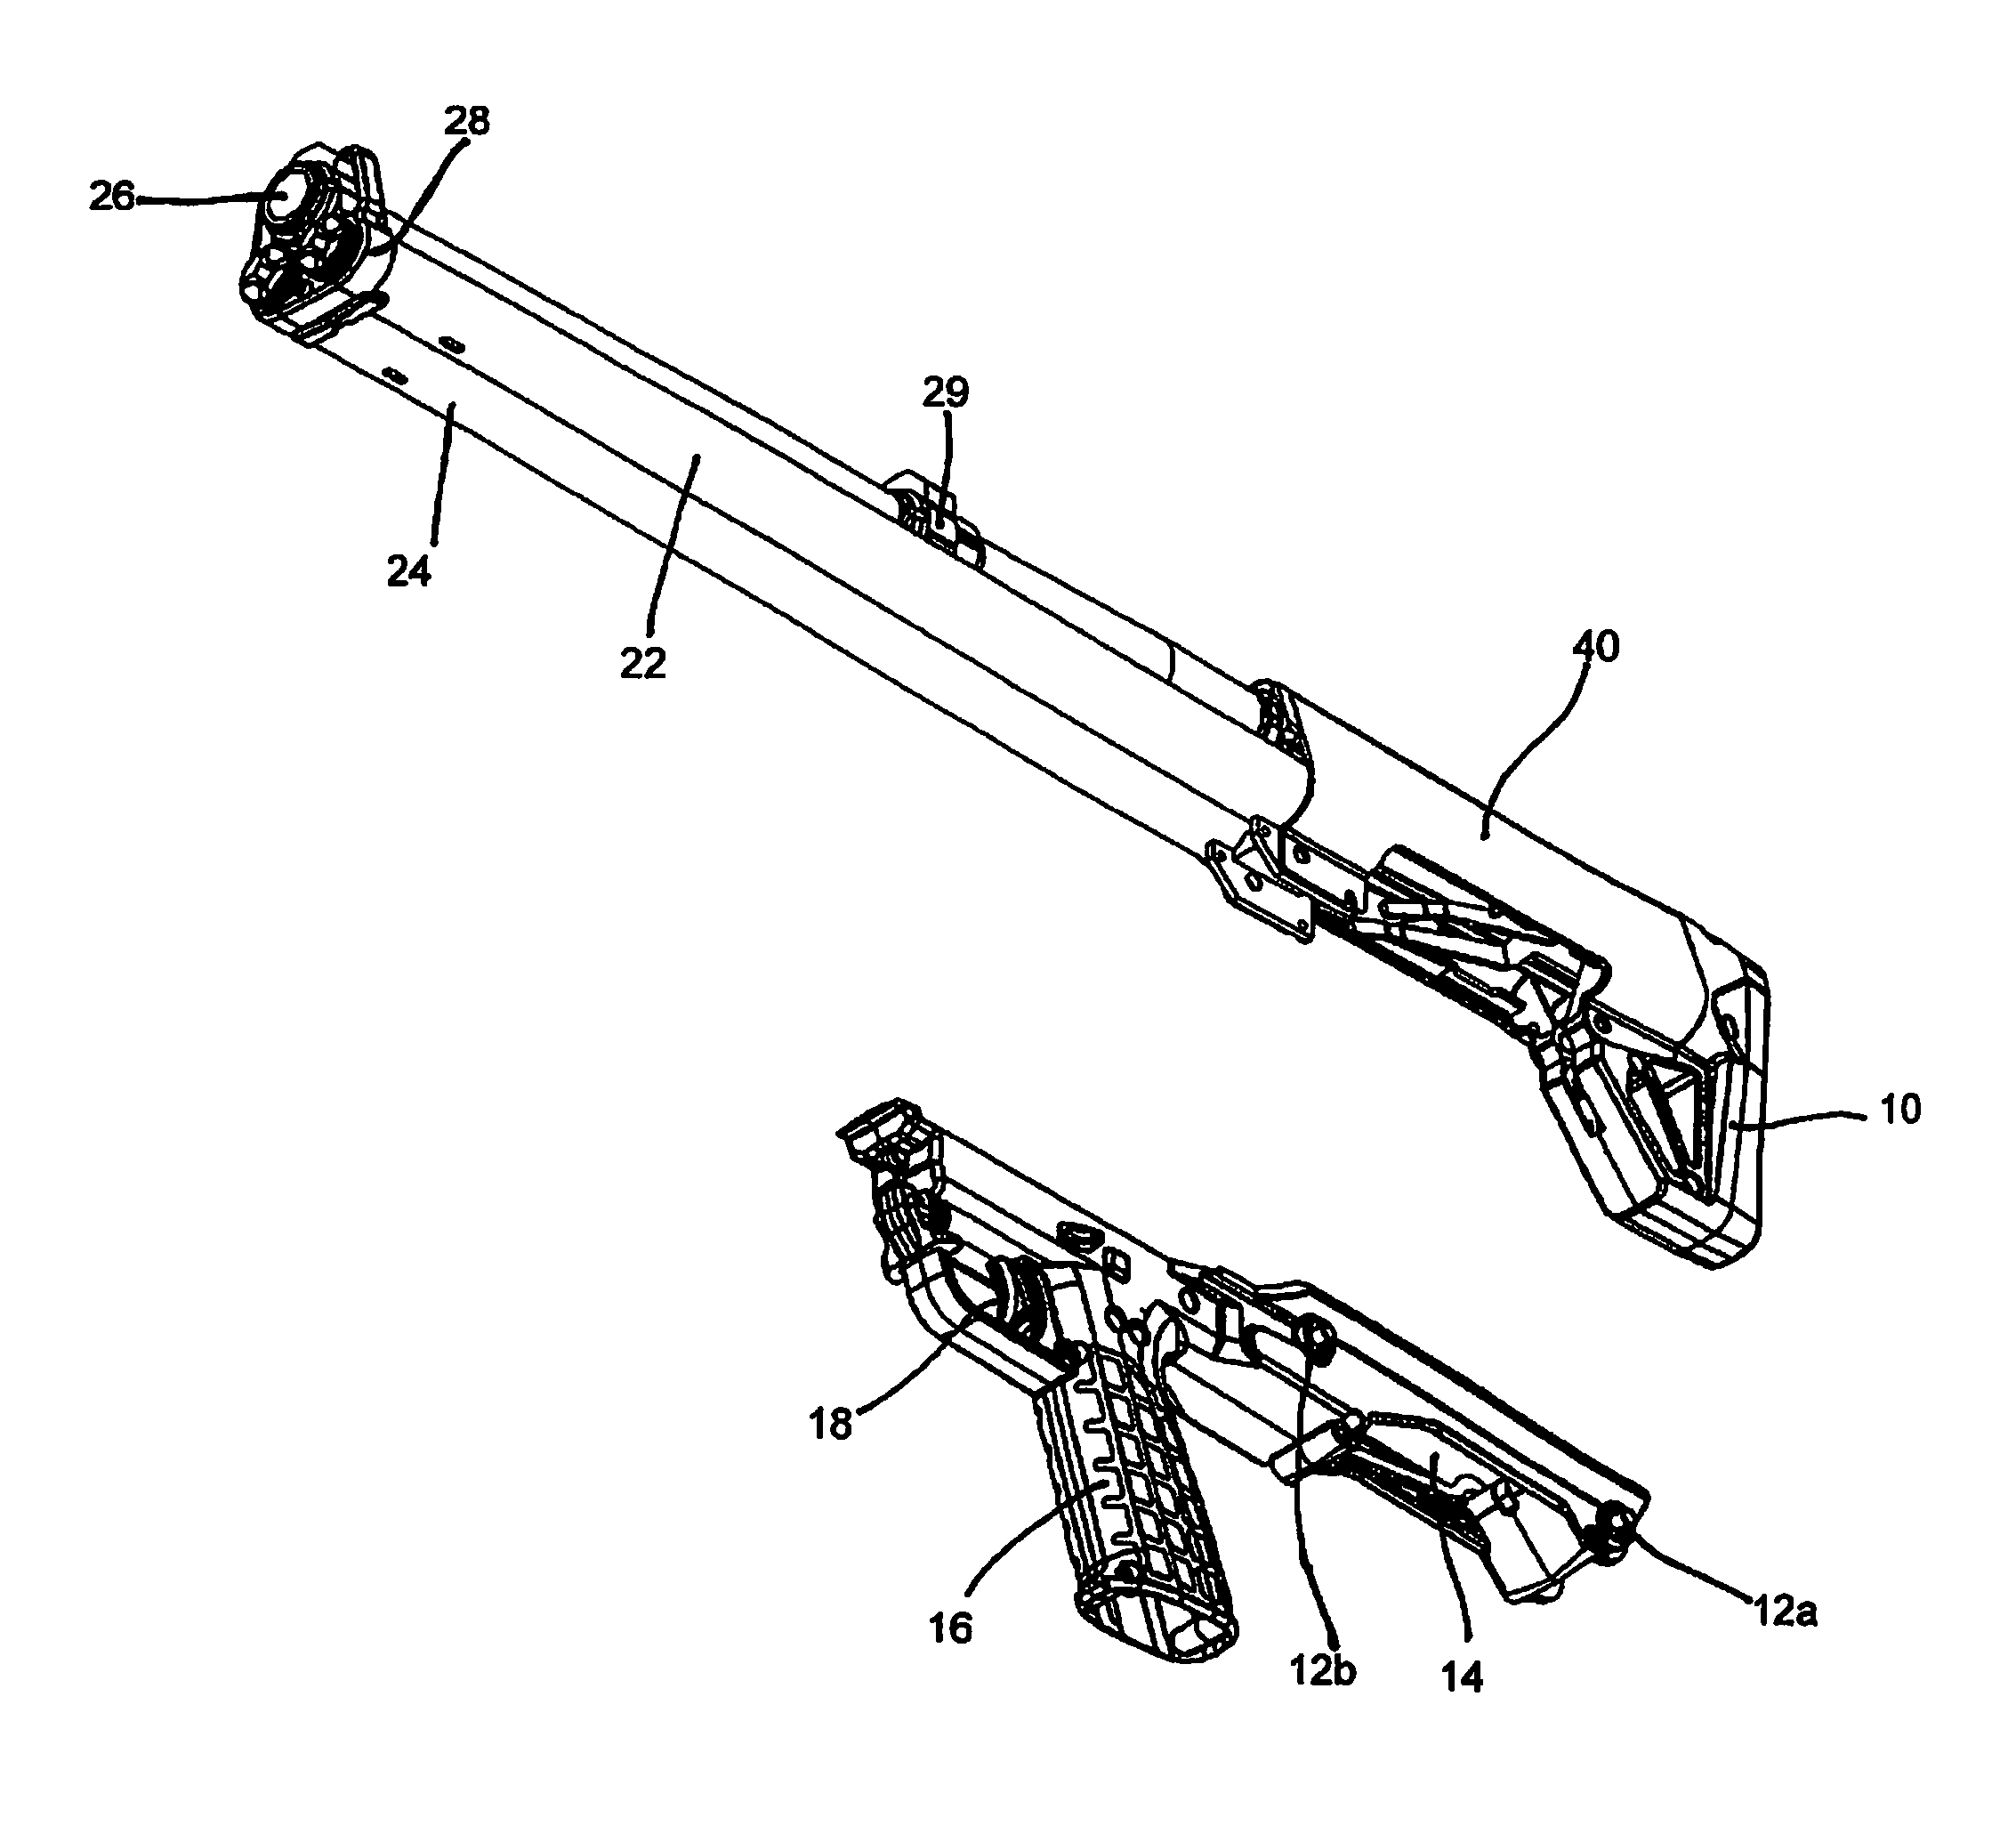 Tubular magazine firearm with sheet metal receiver